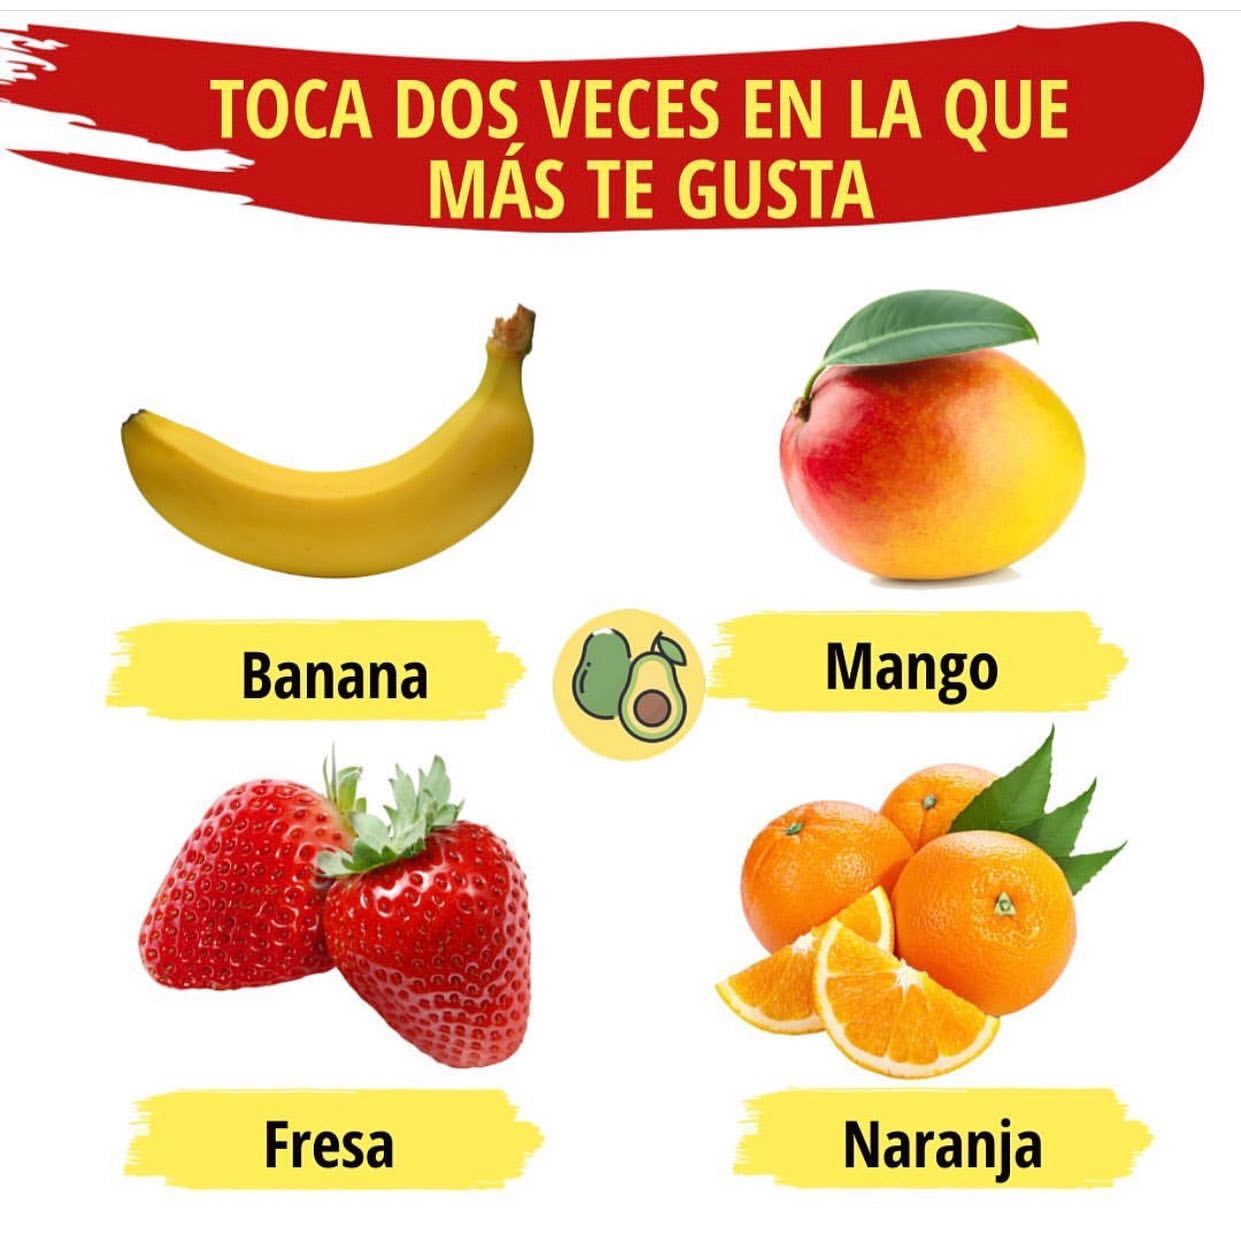 Toca dos veces en la que más te gusta: Banana Fresa Mango Naranja.